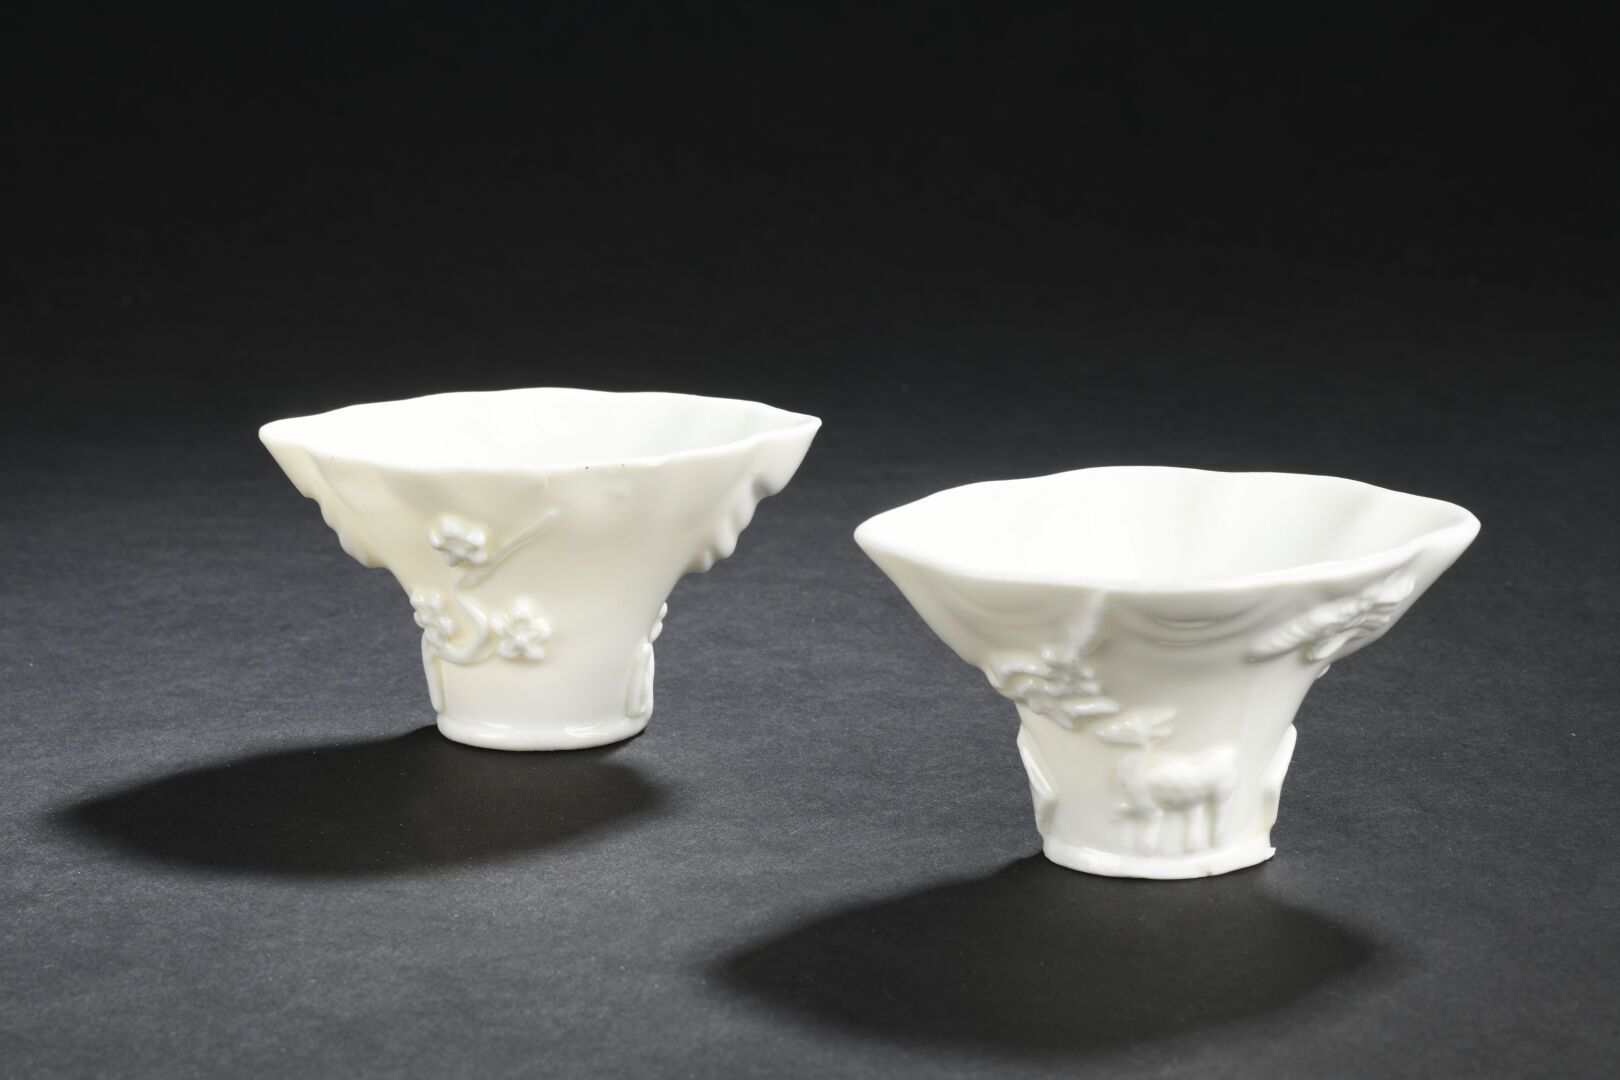 Null 两个中国白瓷酒杯
中国，康熙时期(1662-1722)
仿犀牛角杯，一个杯口有浅浮雕的梅花纹，另一个有动物纹；一个杯口有小缺口。
长. 9,8厘米